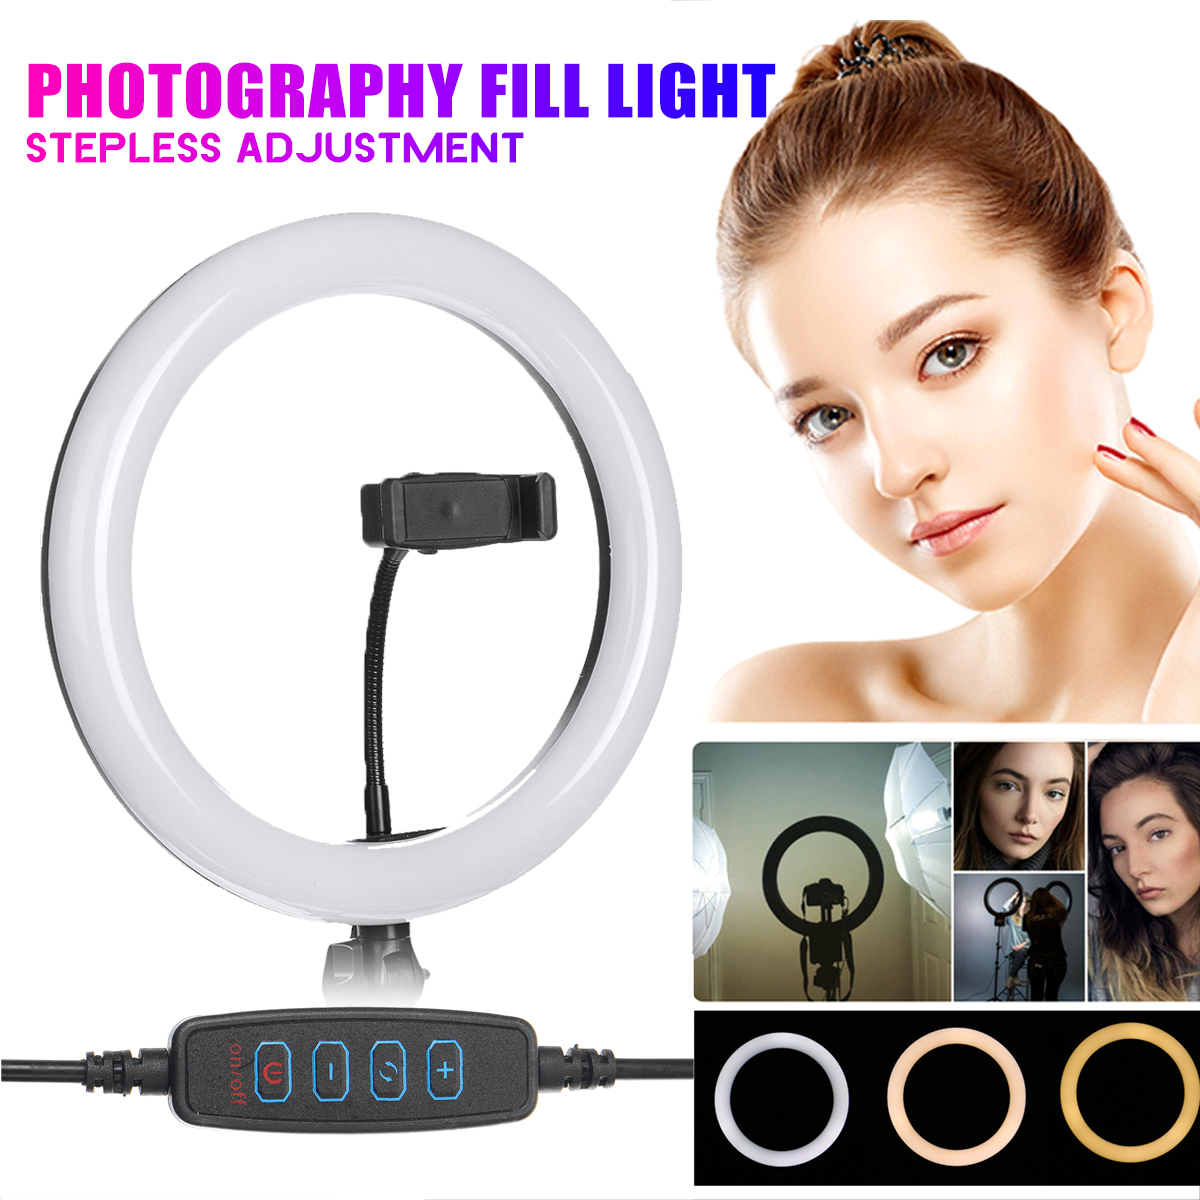 26cm-Portable-Stepless-Adjustable-LED-Ring-Full-Light-Makeup-Mirror-Light-Photography-Lighting-Selfi-1659255-2